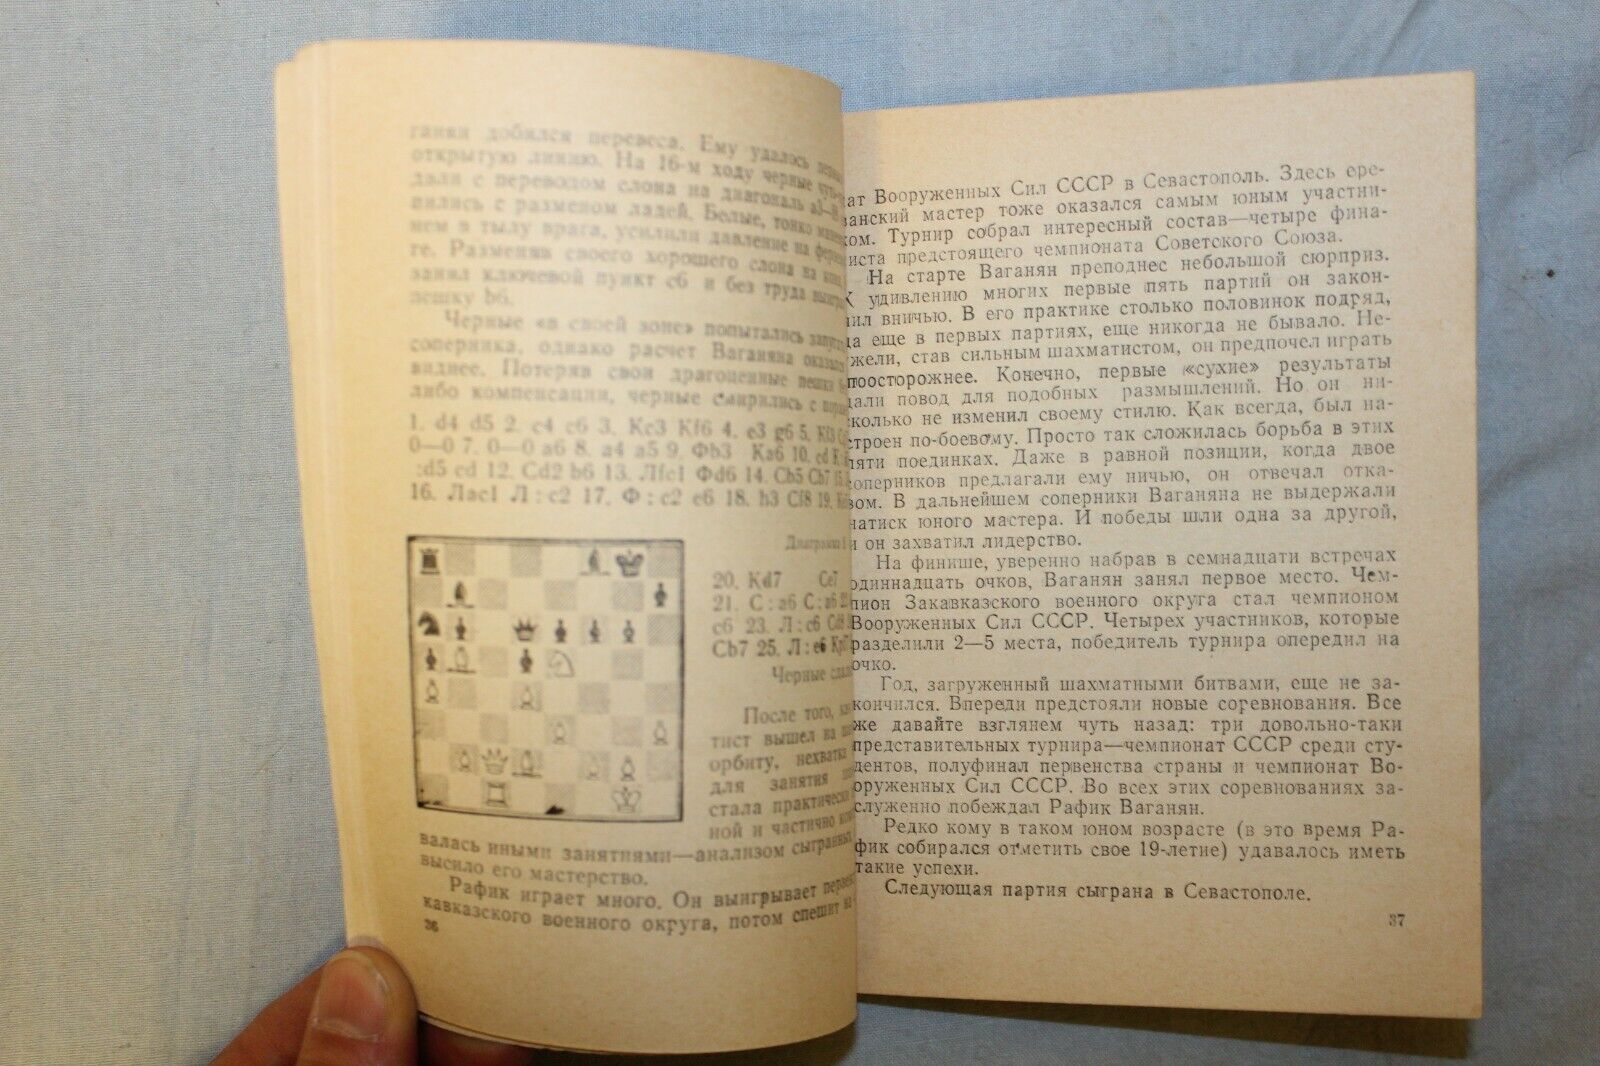 11673.Soviet Book: By Path of Big Chess. Akopyan. Erevan 1979. About Vaganyan